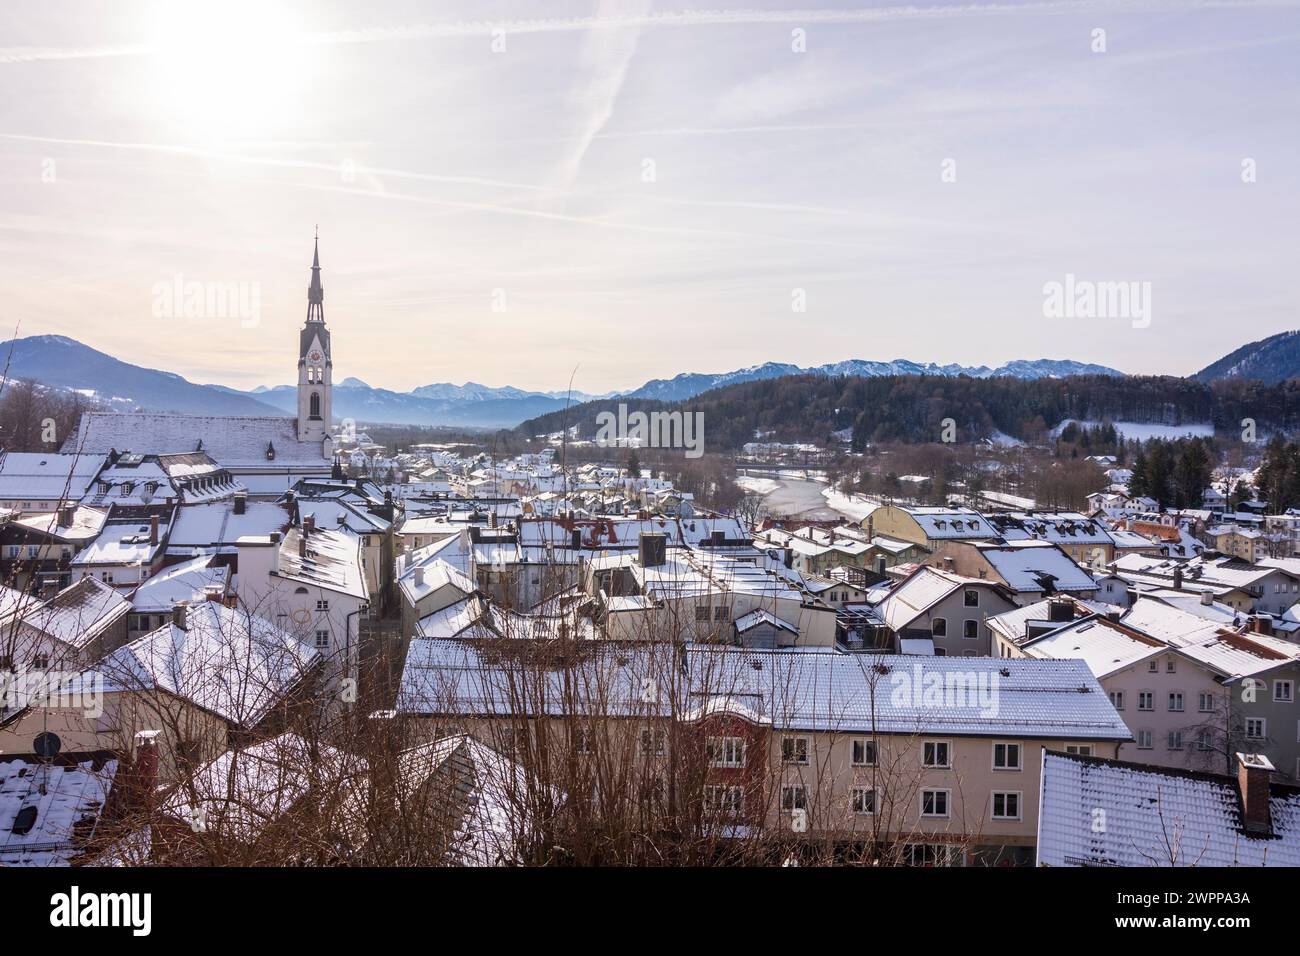 Bad Tölz, Old Town, church Mariä Himmelfahrt, Alps, snow, Tölzer Land, Upper Bavaria, Bavaria, Germany Stock Photo